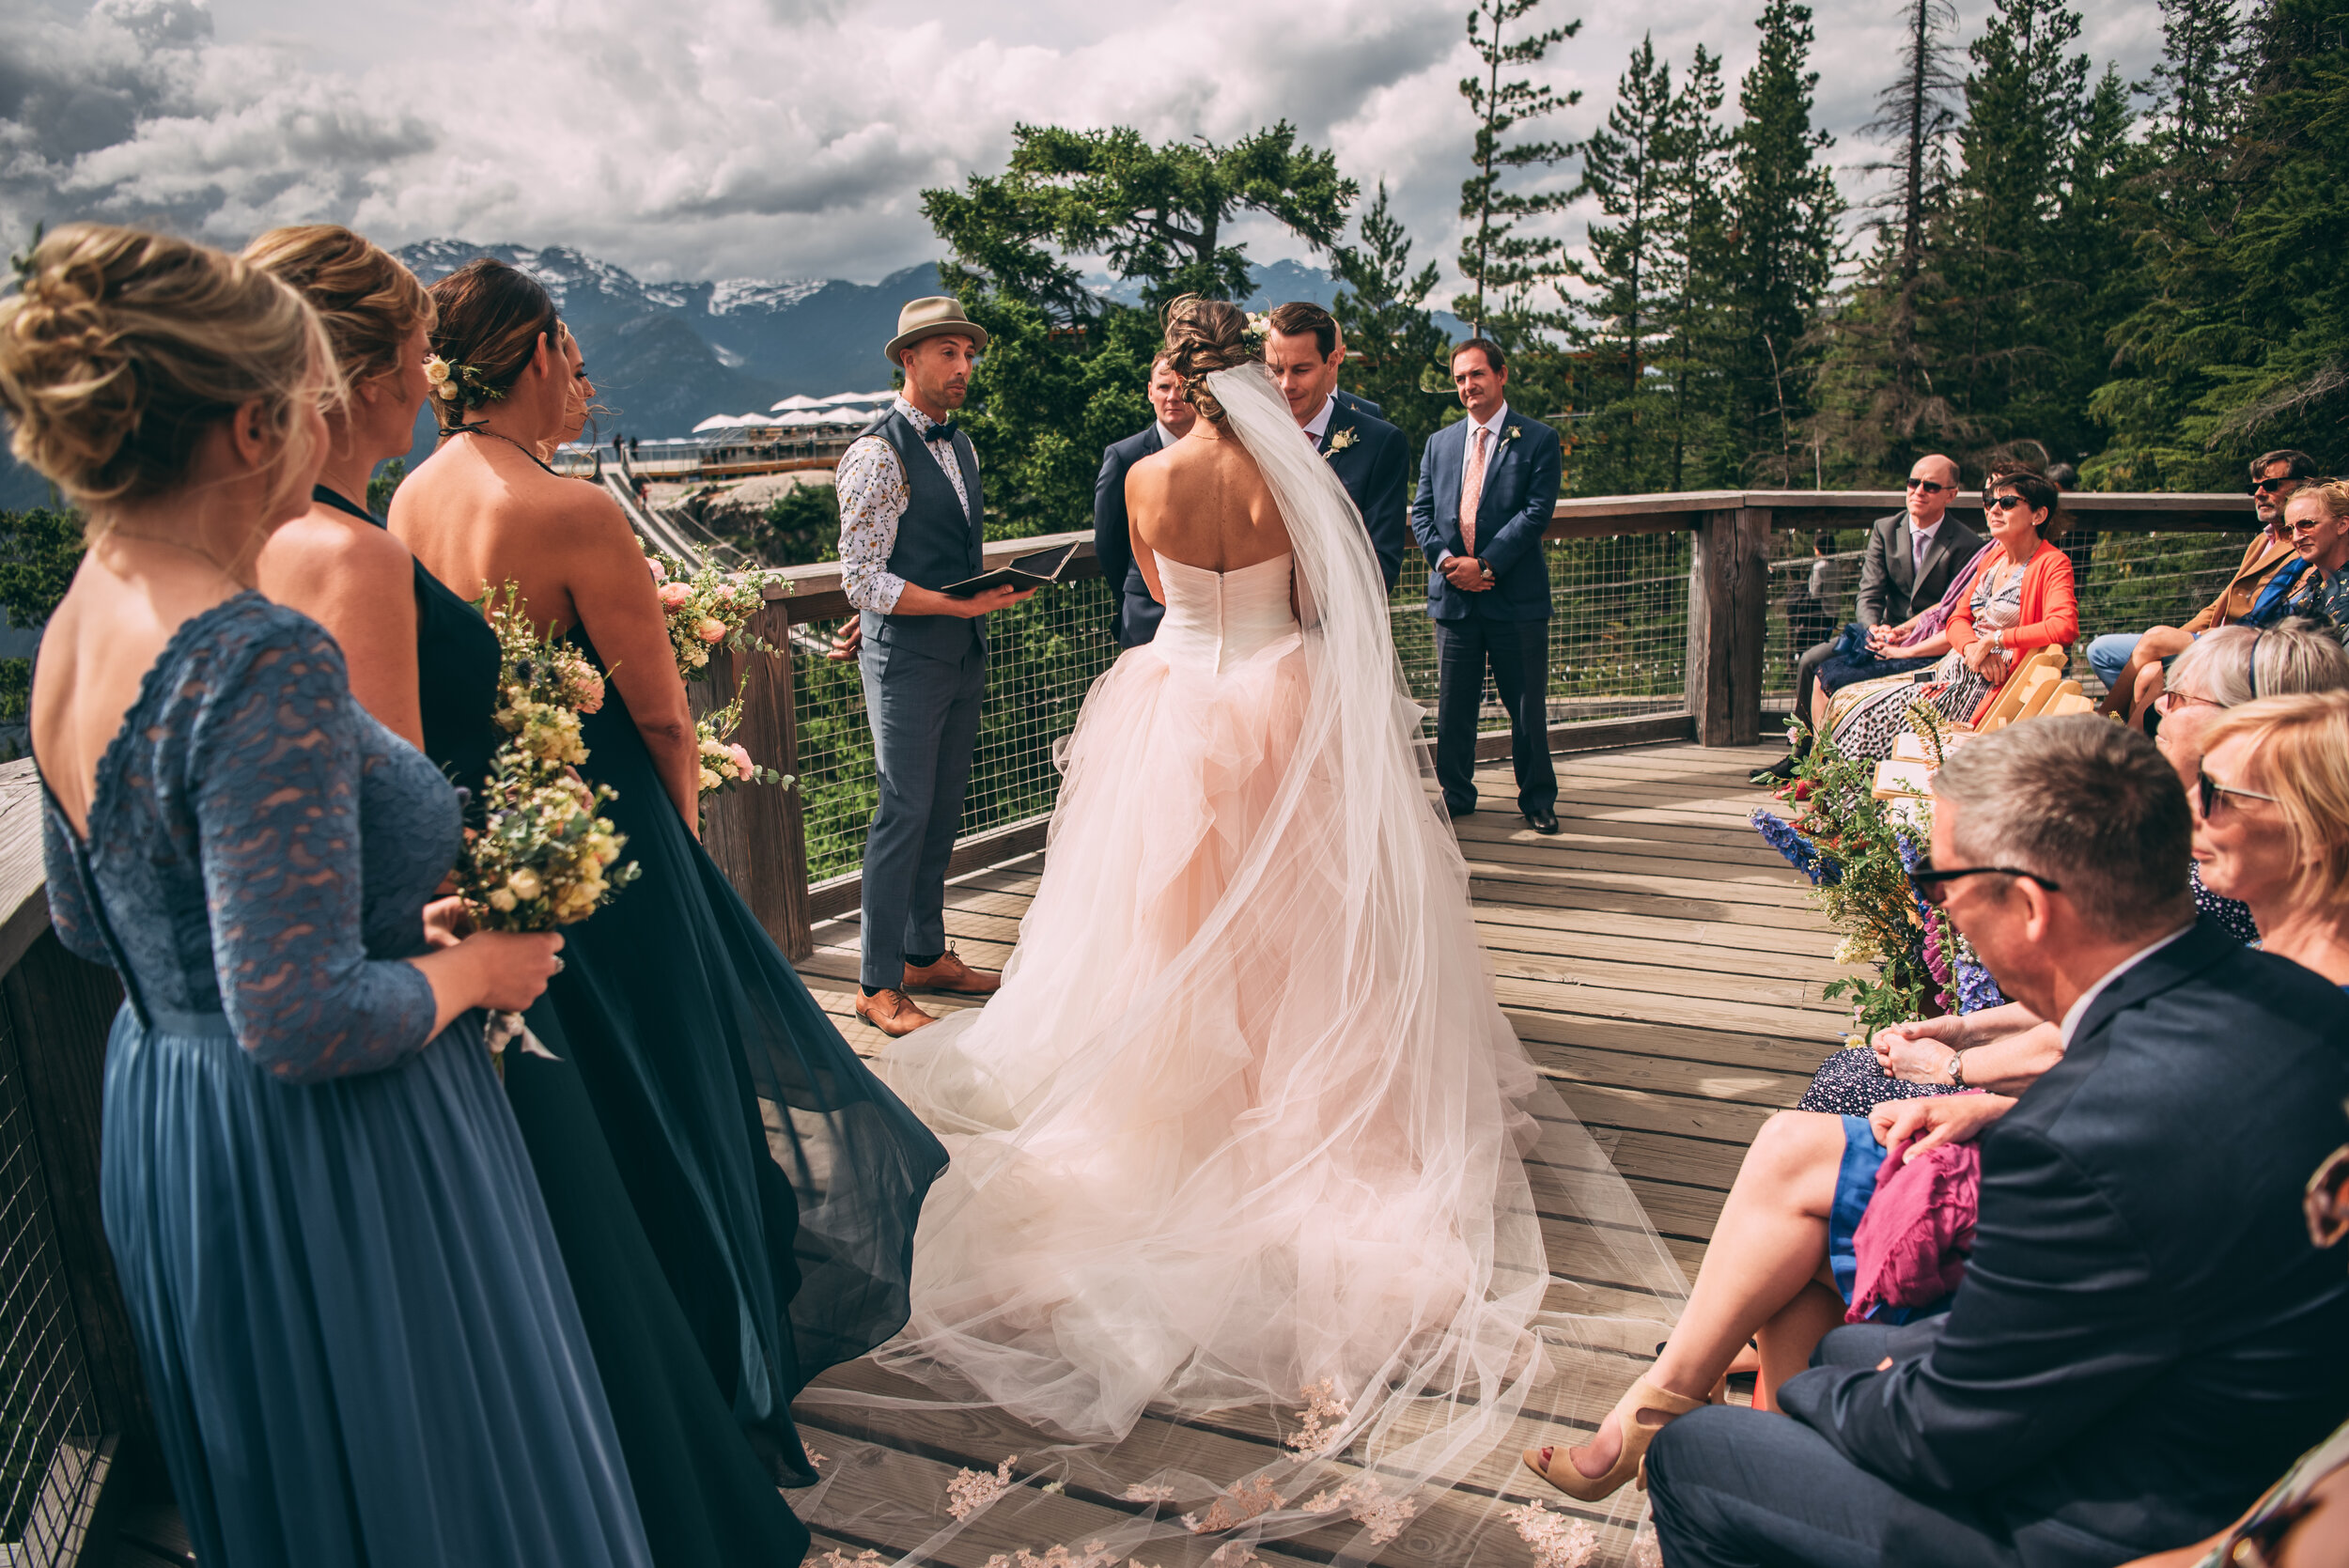 Hayley & Jon Sea to Sky Gondola Wedding - June 17, 2019 - Laura Olson Photography - Sea to Sky Wedding Photographer-2790.jpg